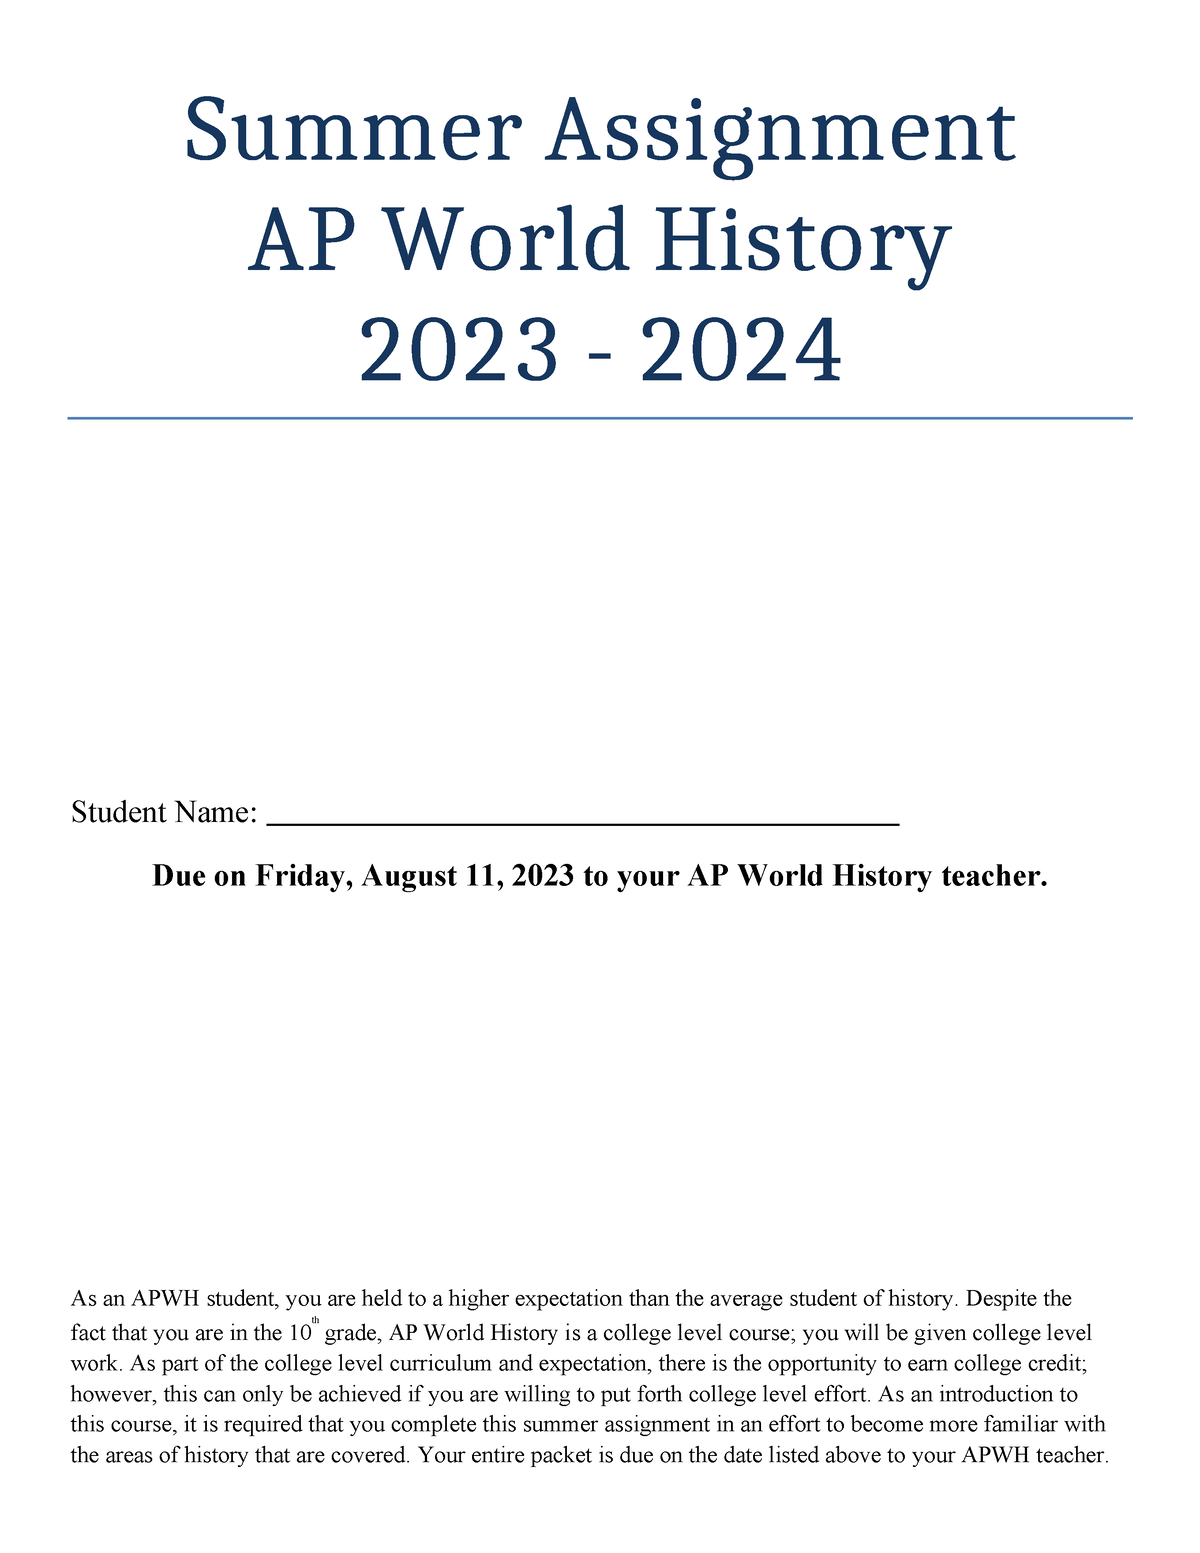 ap world history summer assignment answer key 2023